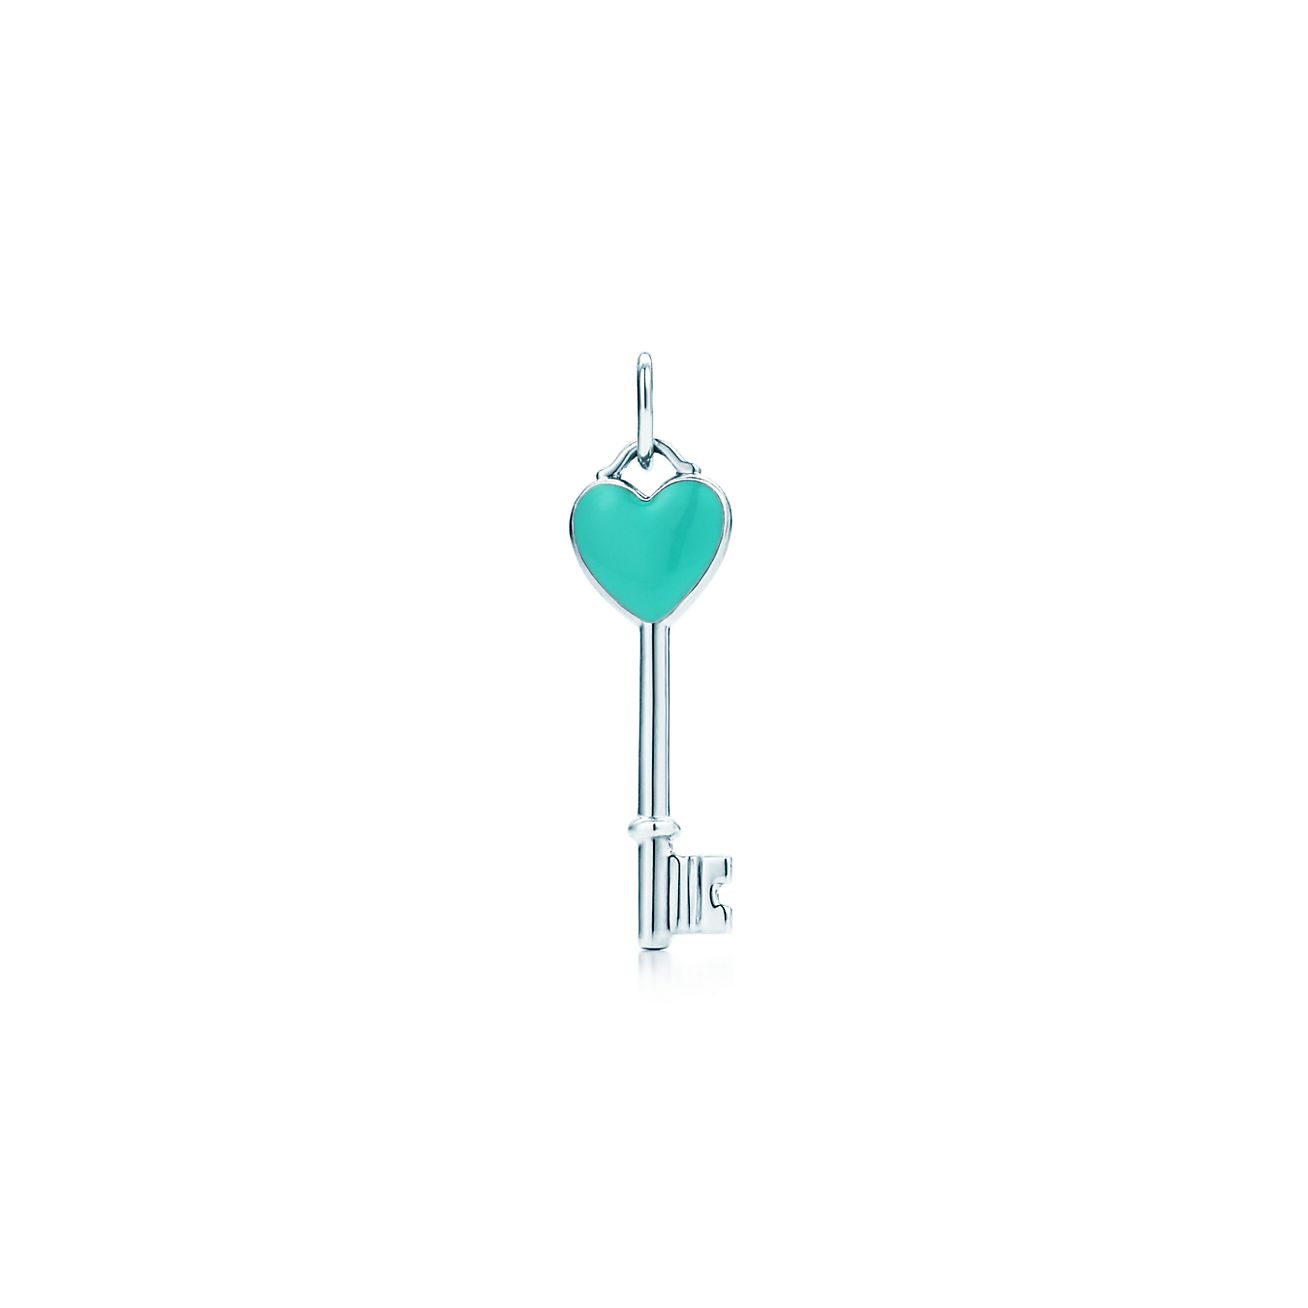 Tiffany Keys Heart Key in Silver with Blue Enamel Finish, Mini | Tiffany & Co.